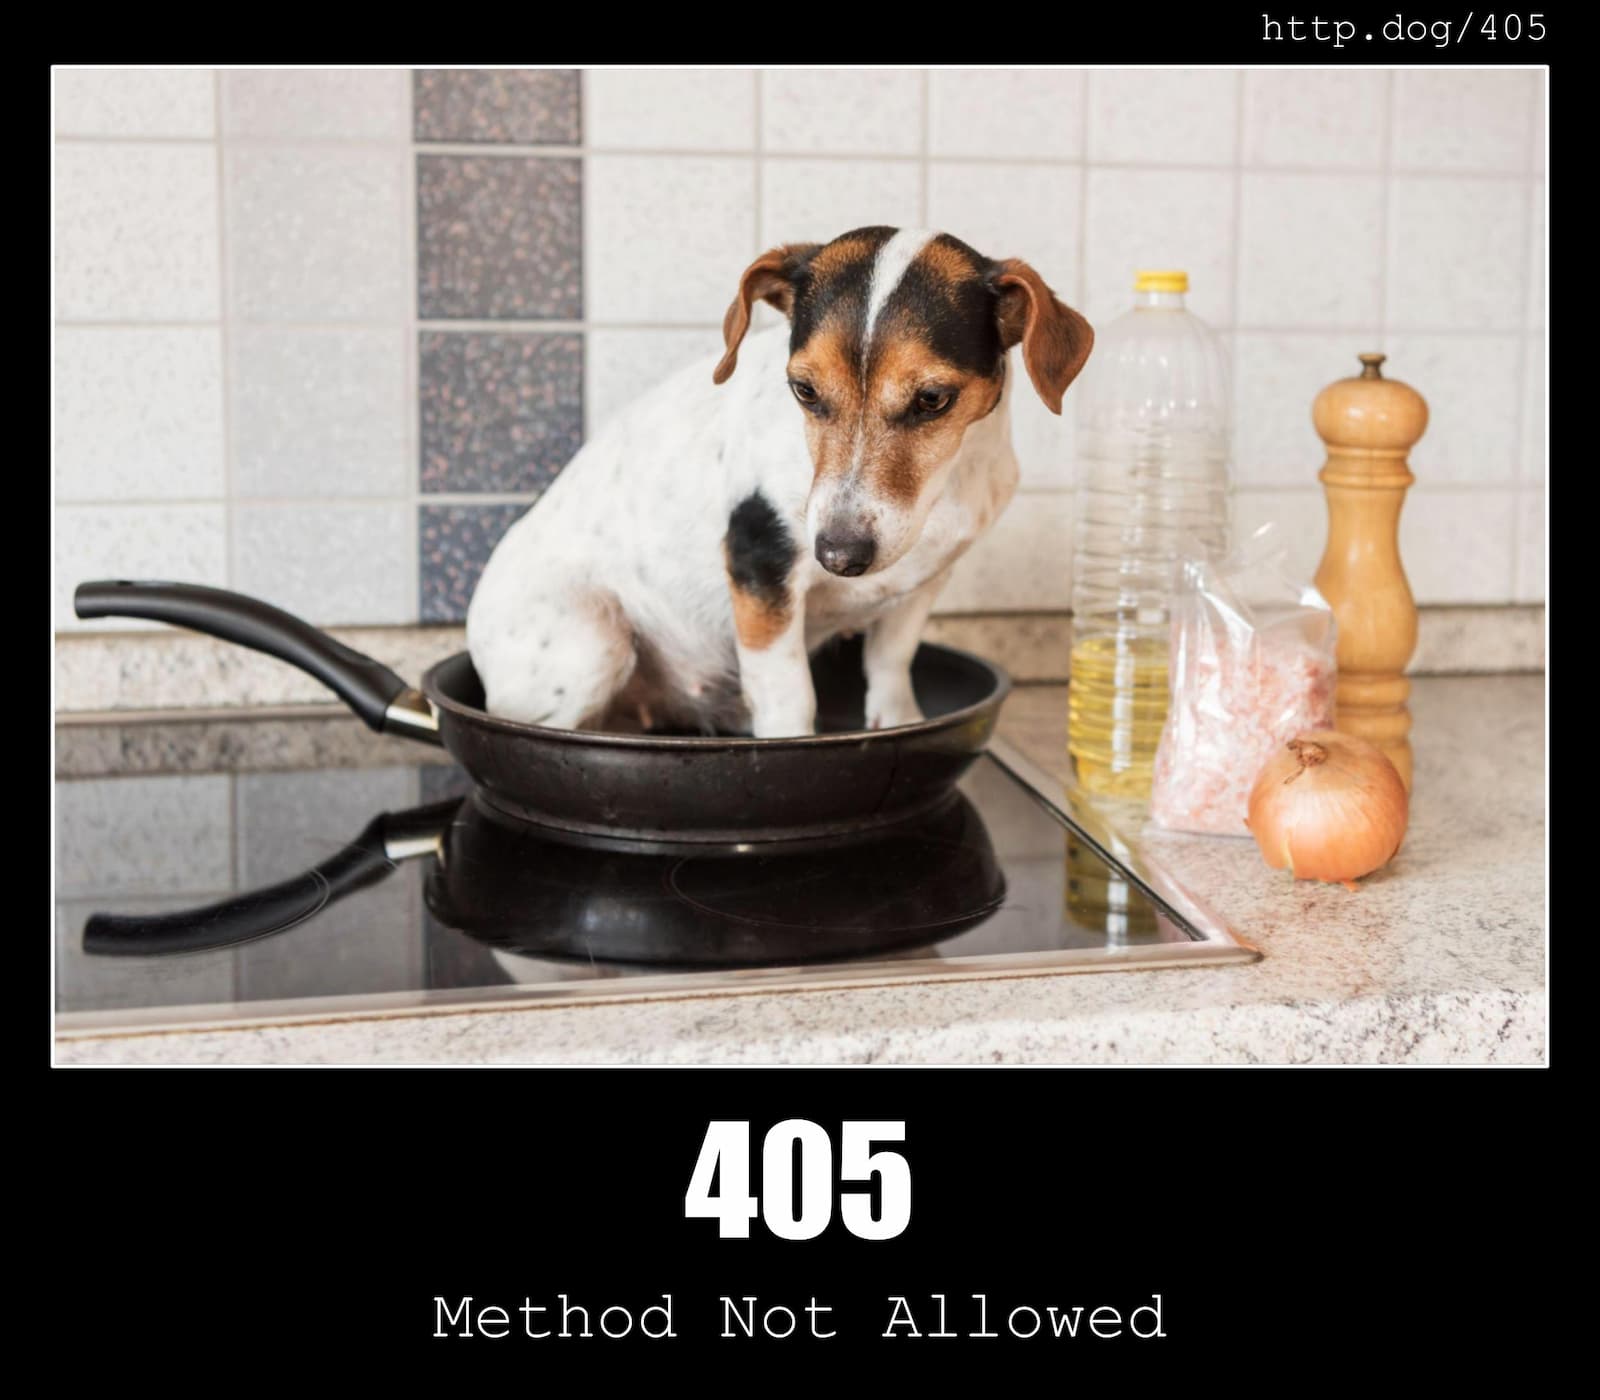 HTTP Status Code 405 Method Not Allowed & Dogs